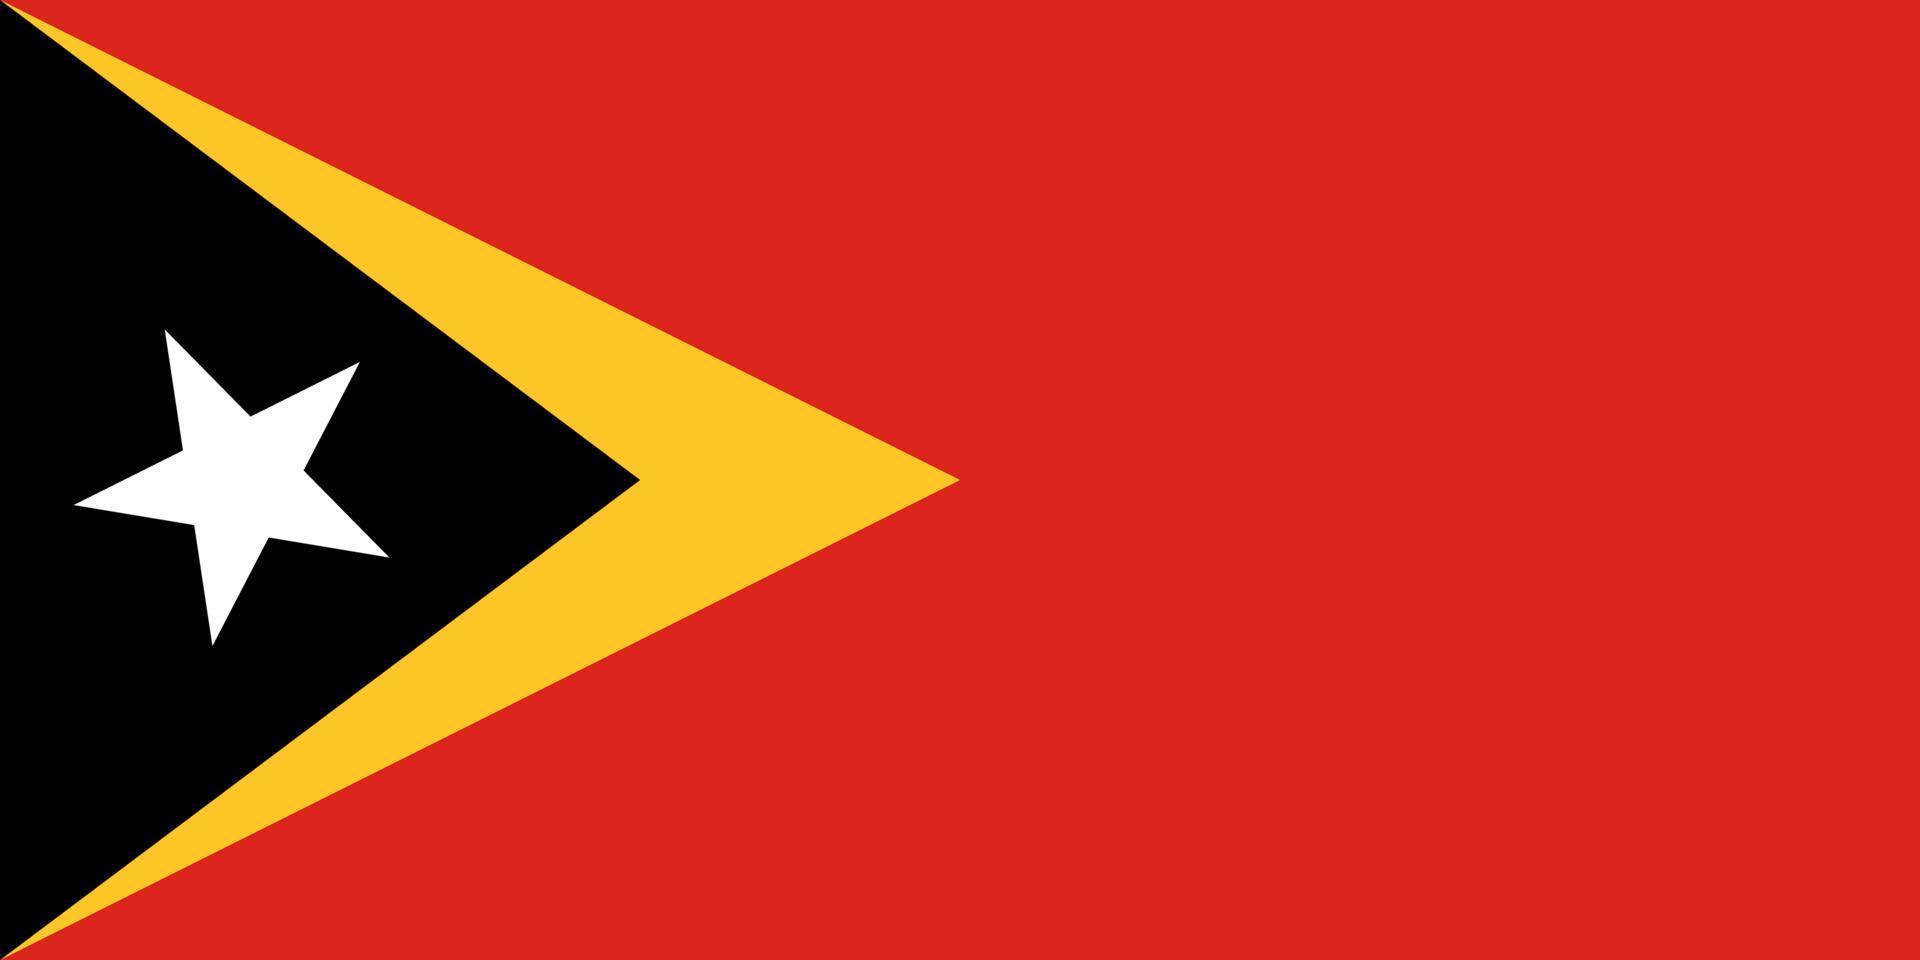 este Timor sencillo bandera correcto tamaño, proporción, colores. vector